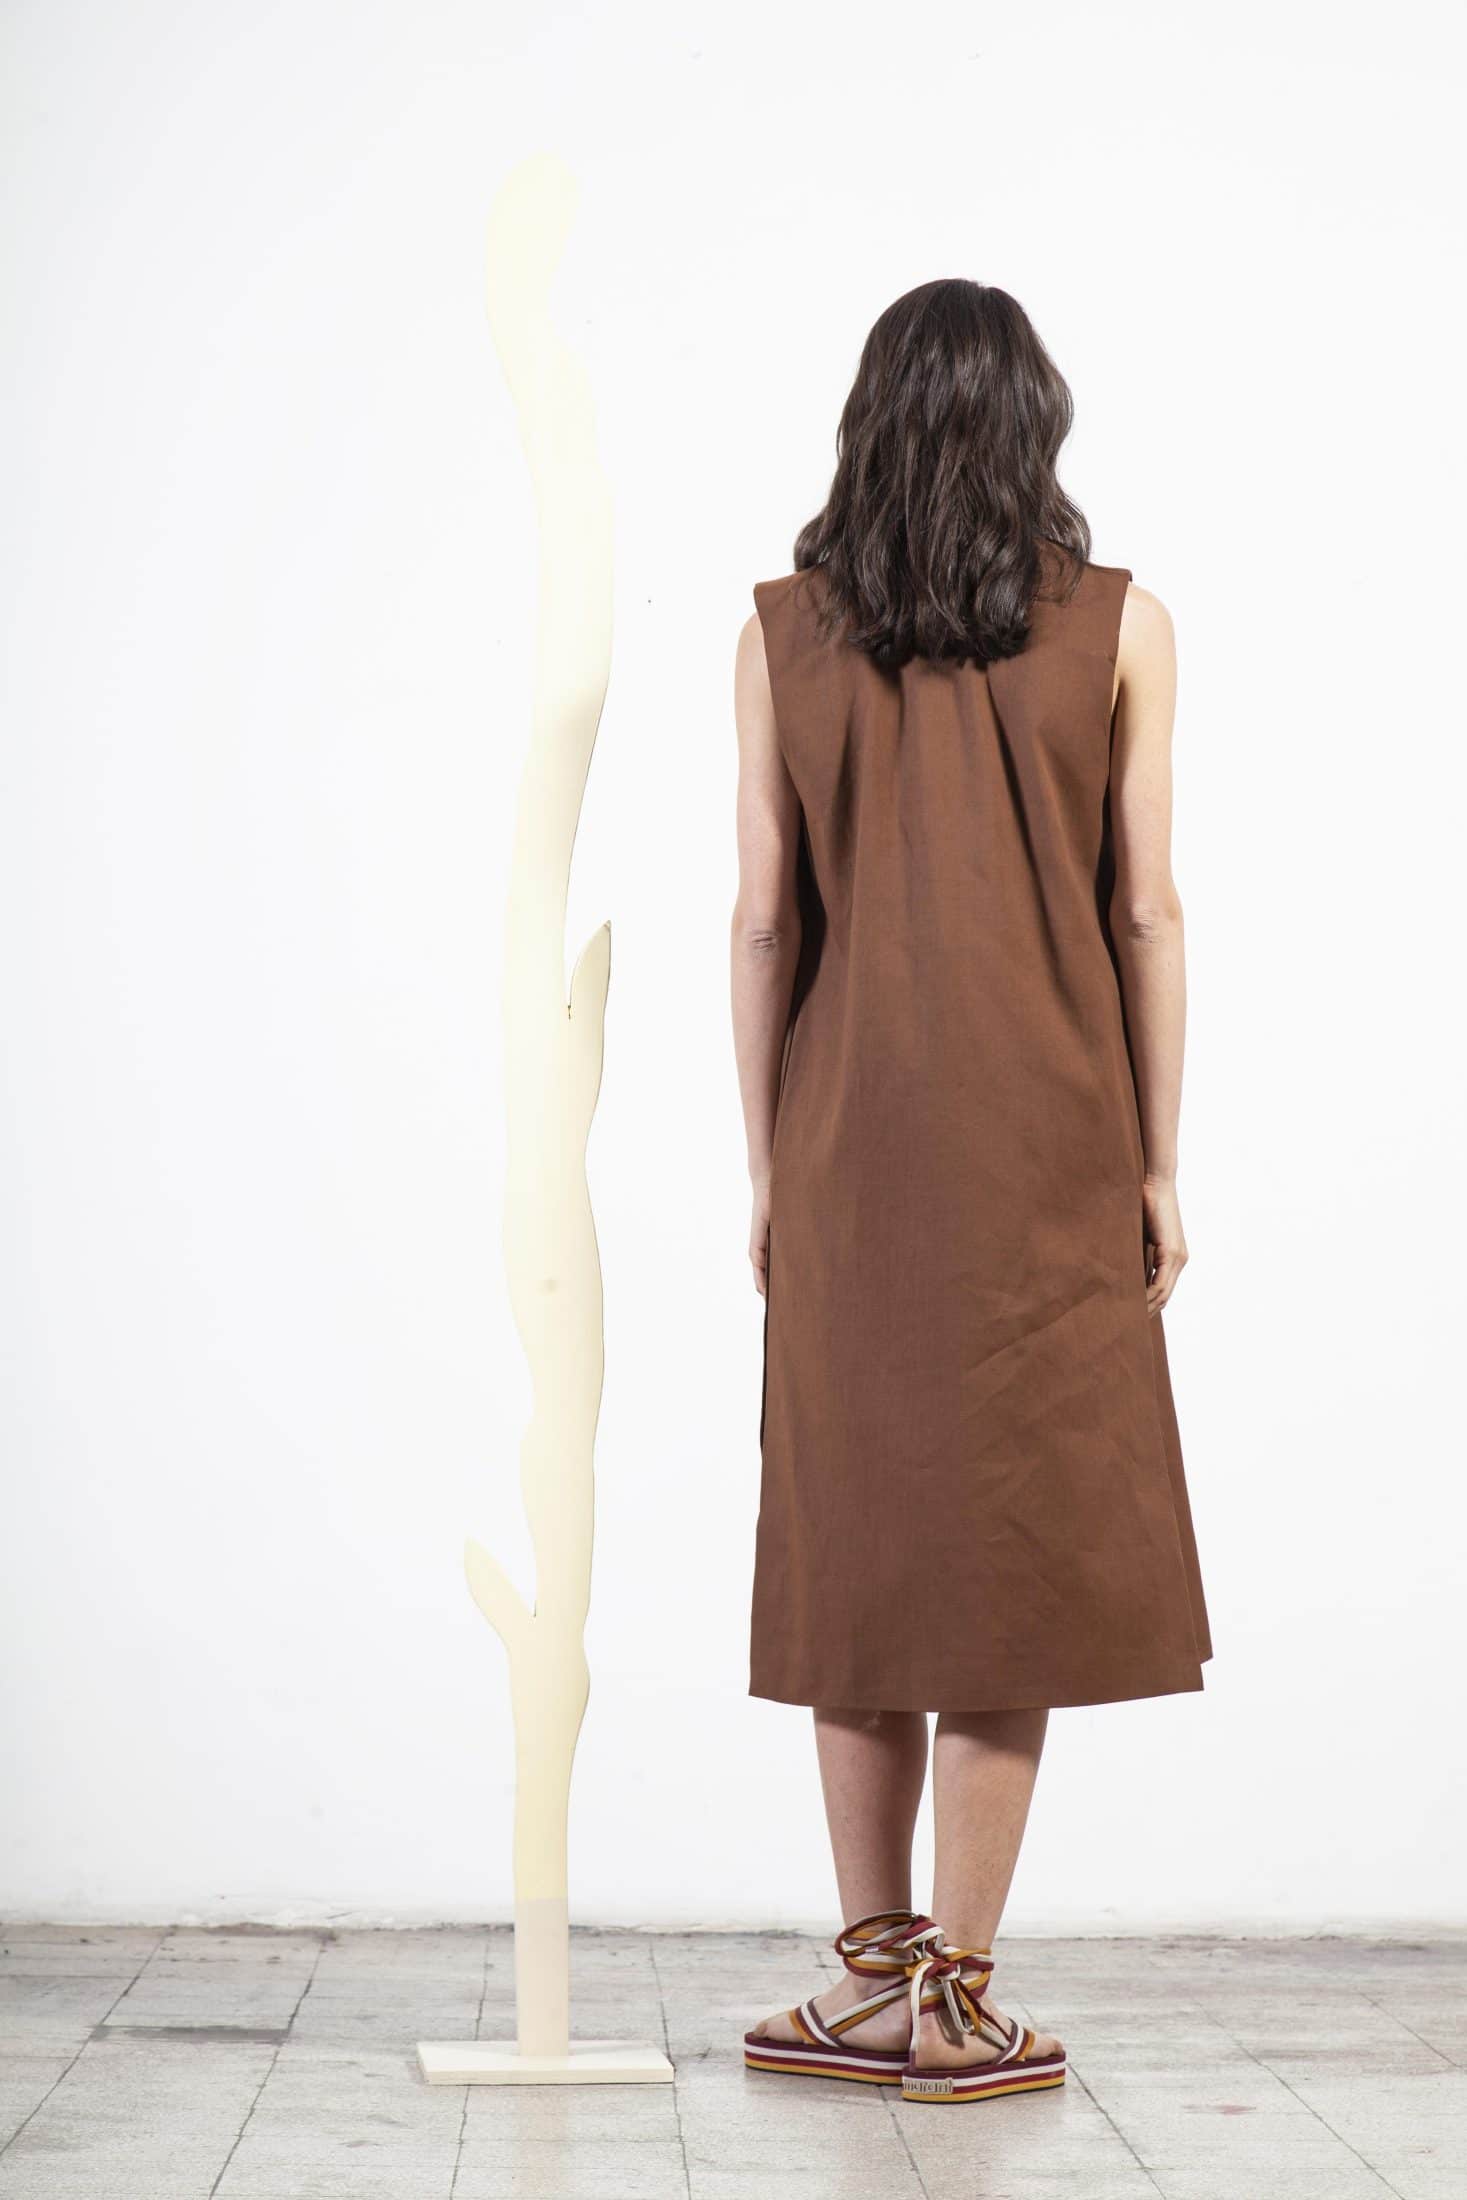 Souldaze Collection chaquetas y prendas de vestir Irene long Gilet Brown moda sostenible moda ética